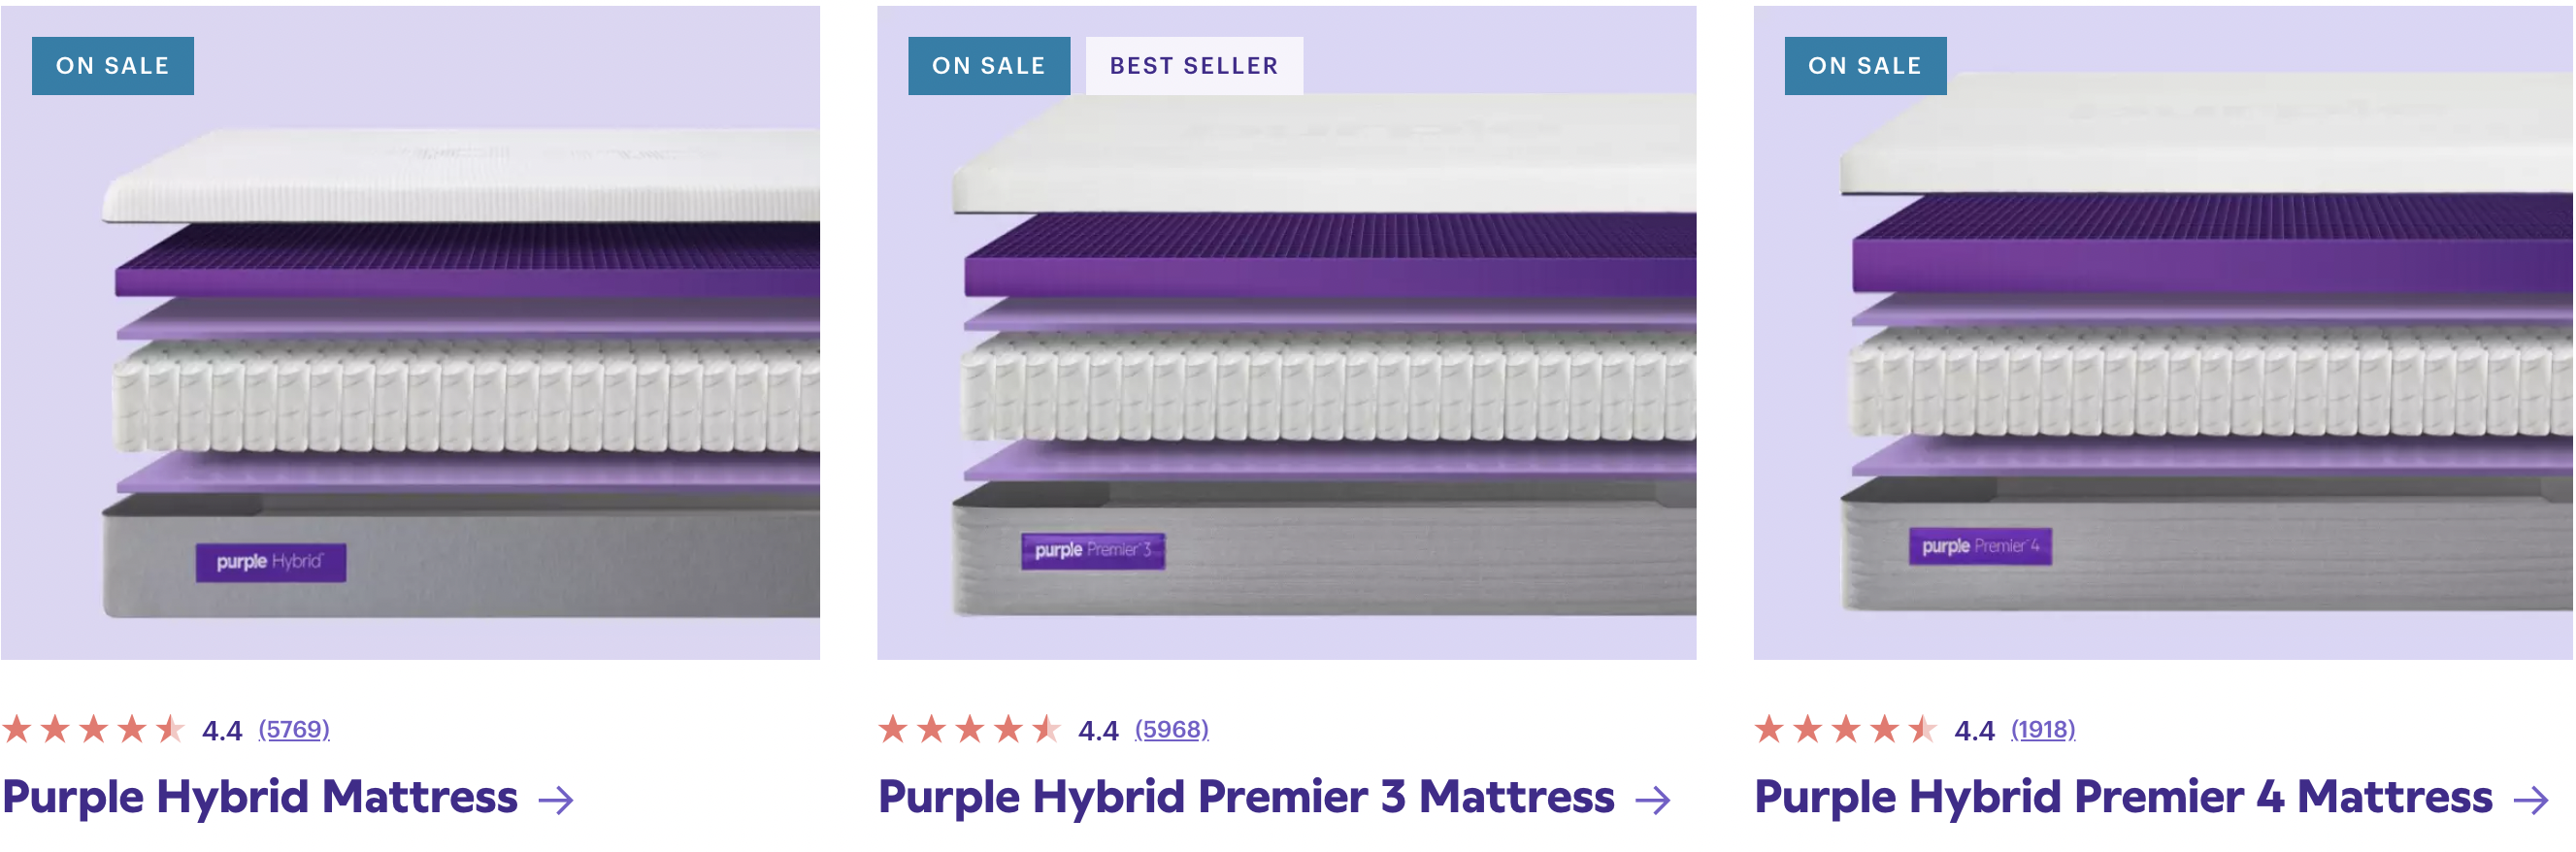 Labor Day Sales on a Purple Mattress